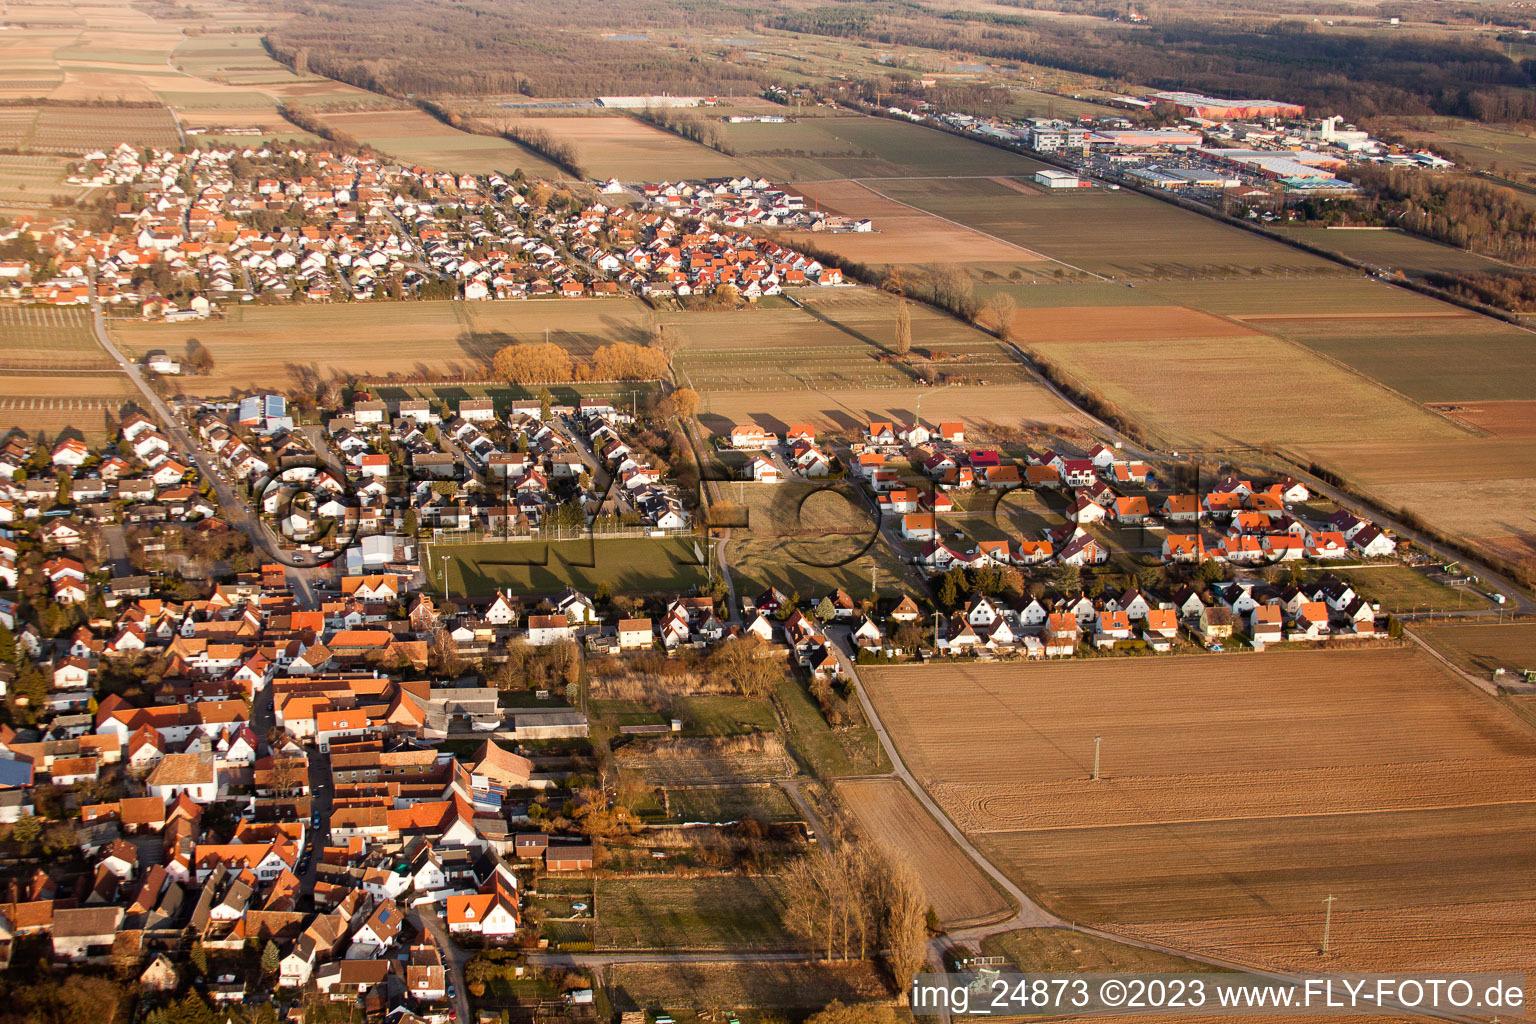 District Dammheim in Landau in der Pfalz in the state Rhineland-Palatinate, Germany from the plane